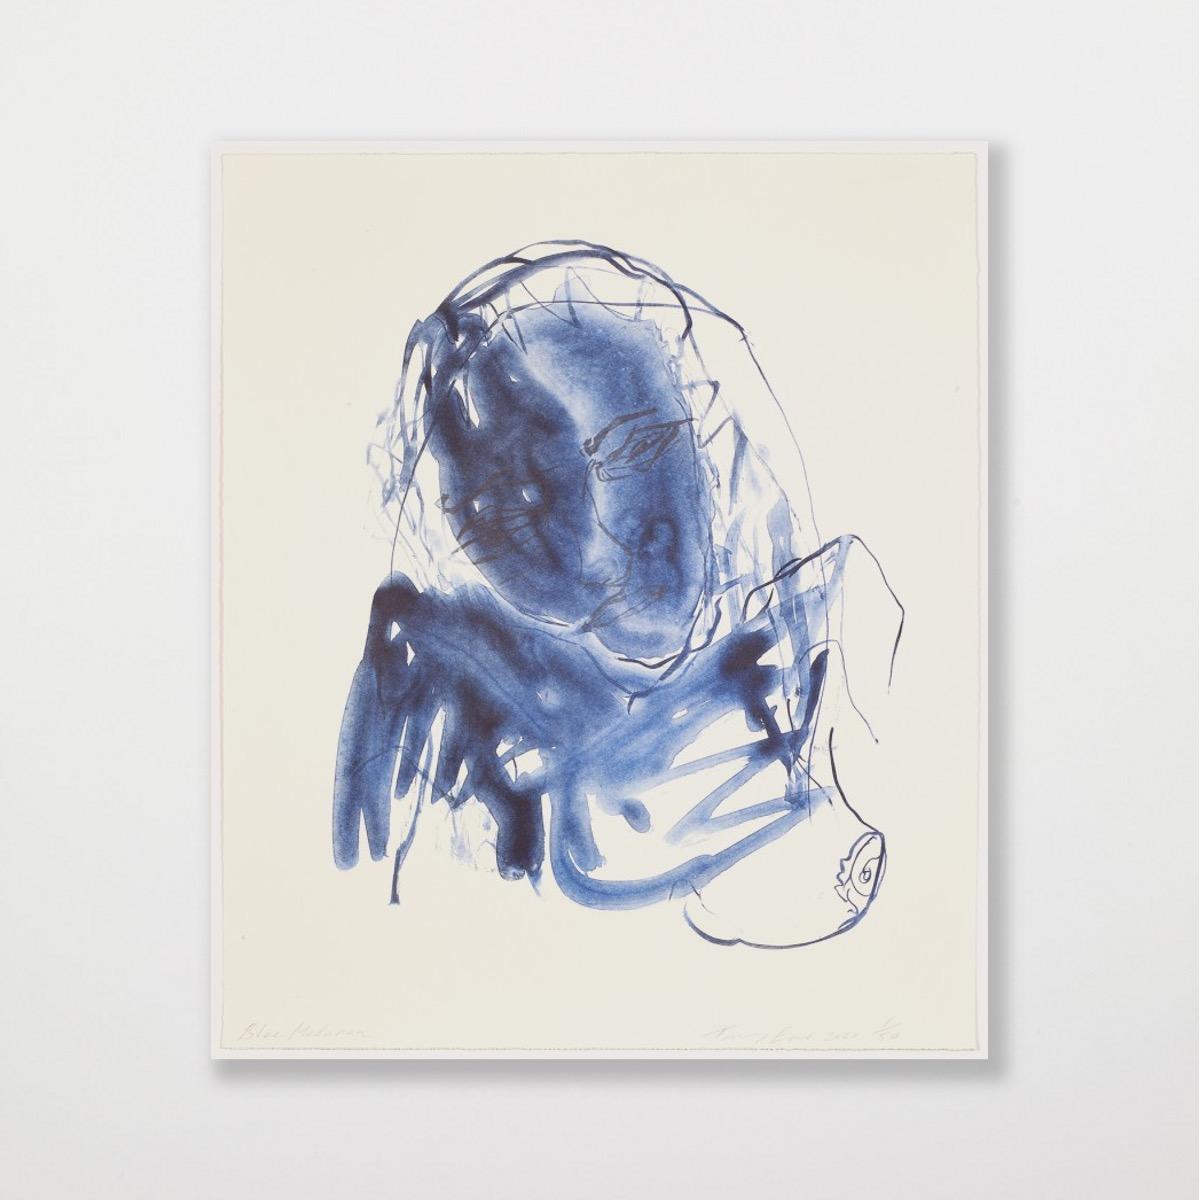 Blue Madonna - Emin, Contemporary, YBAs, Lithograph, Portrait, Black For Sale 2